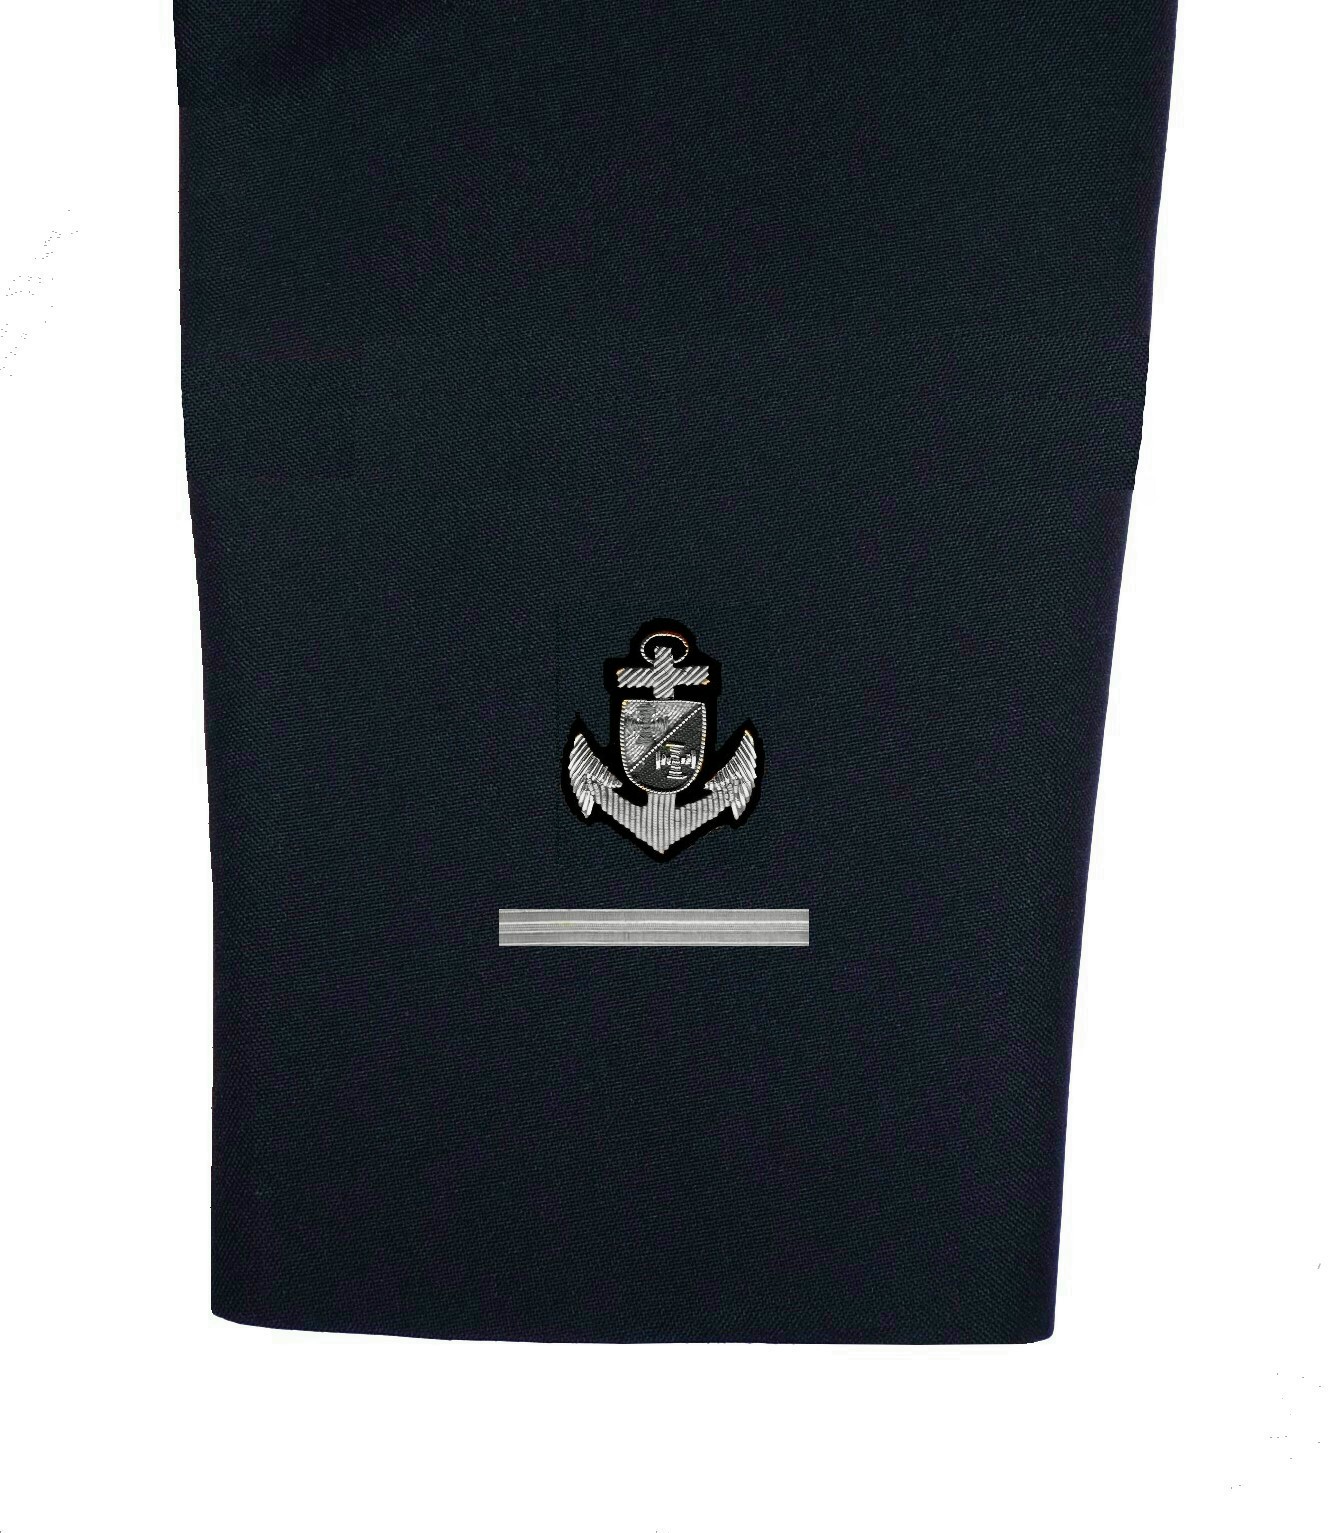 02-aermel-seaman-1st-class